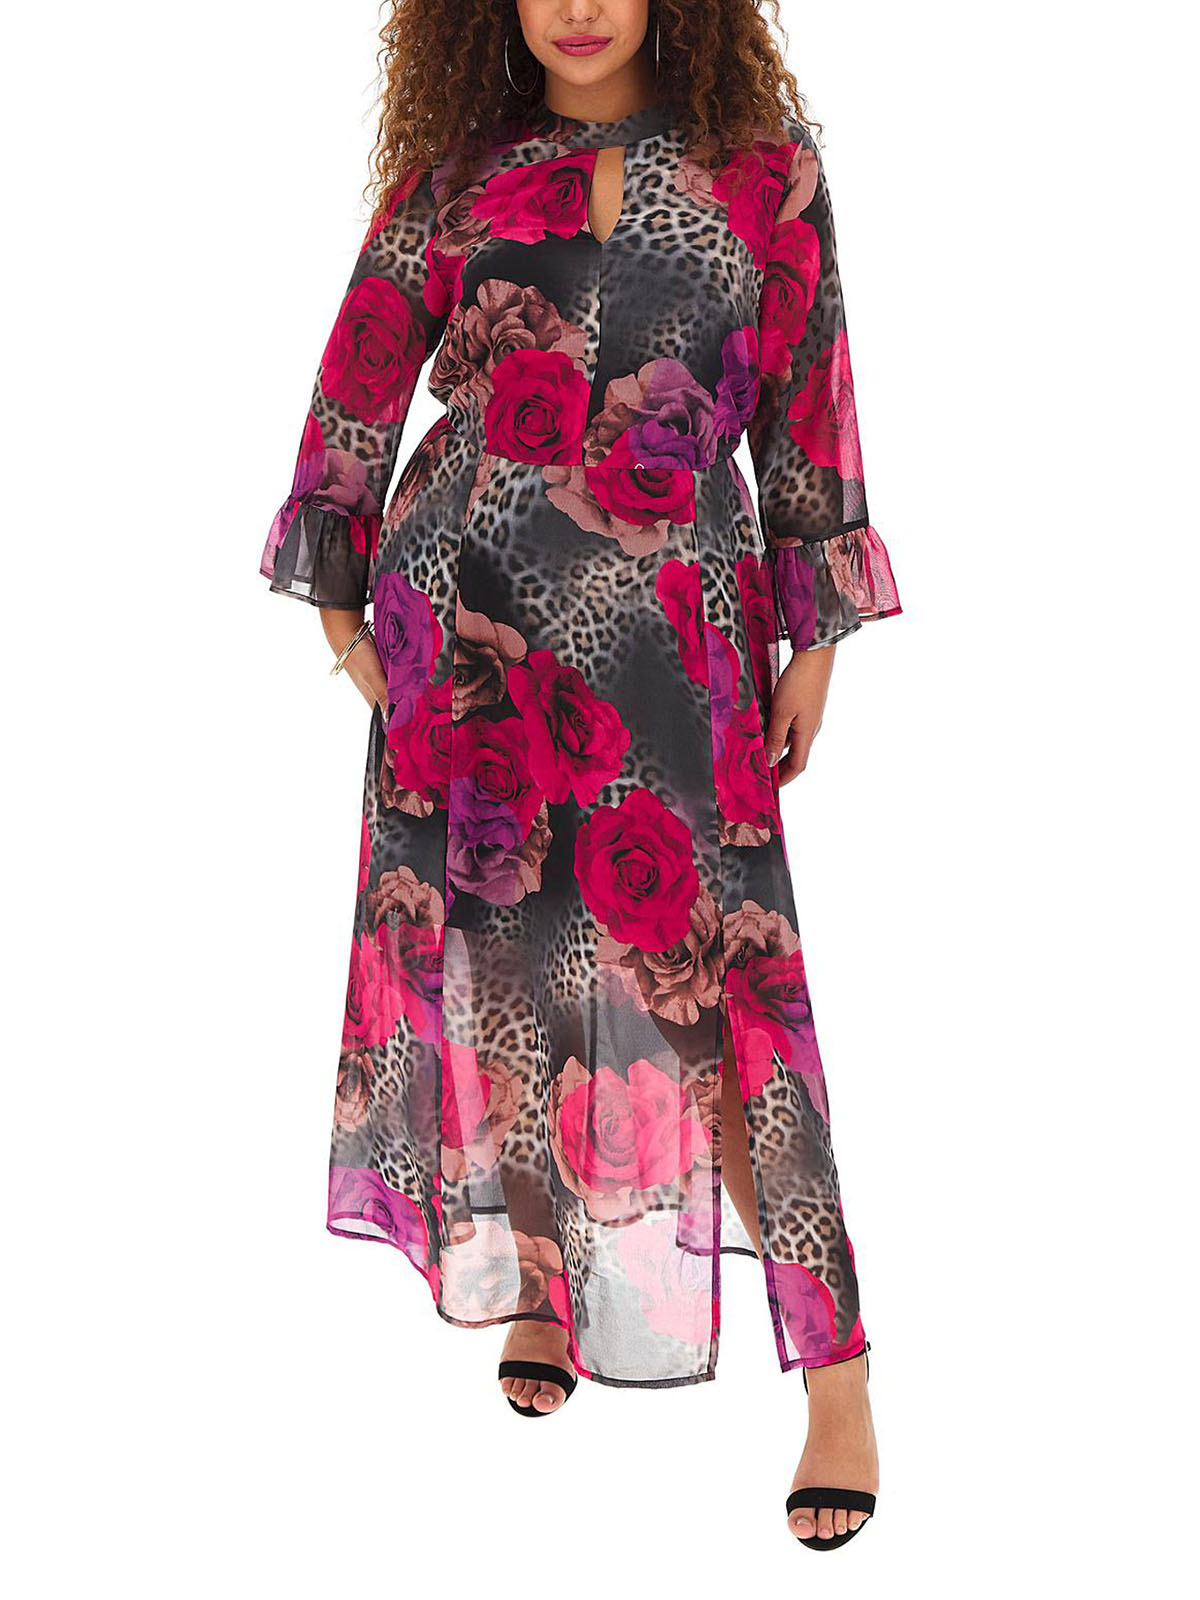 Joanna Hope - - Joanna Hope BLACK Animal Rose Print Maxi Dress